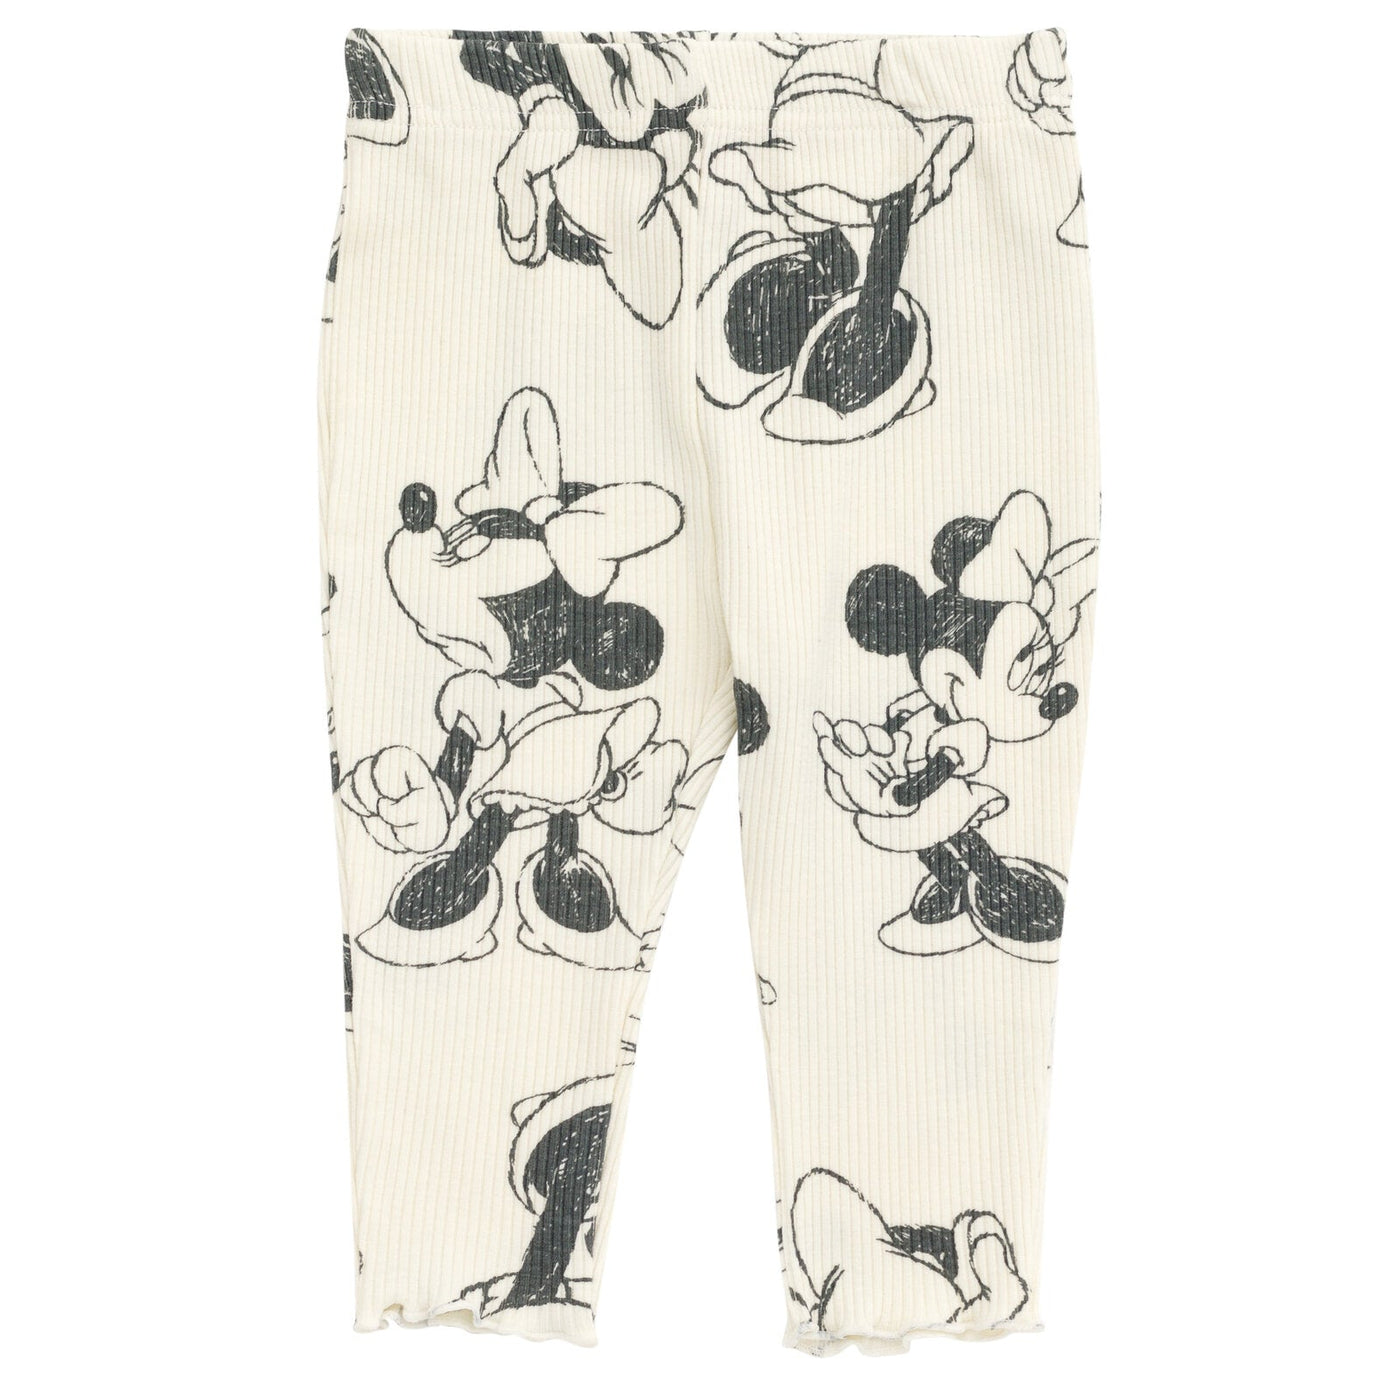 Disney Minnie Mouse Peplum T-Shirt and Pants Outfit Set - imagikids